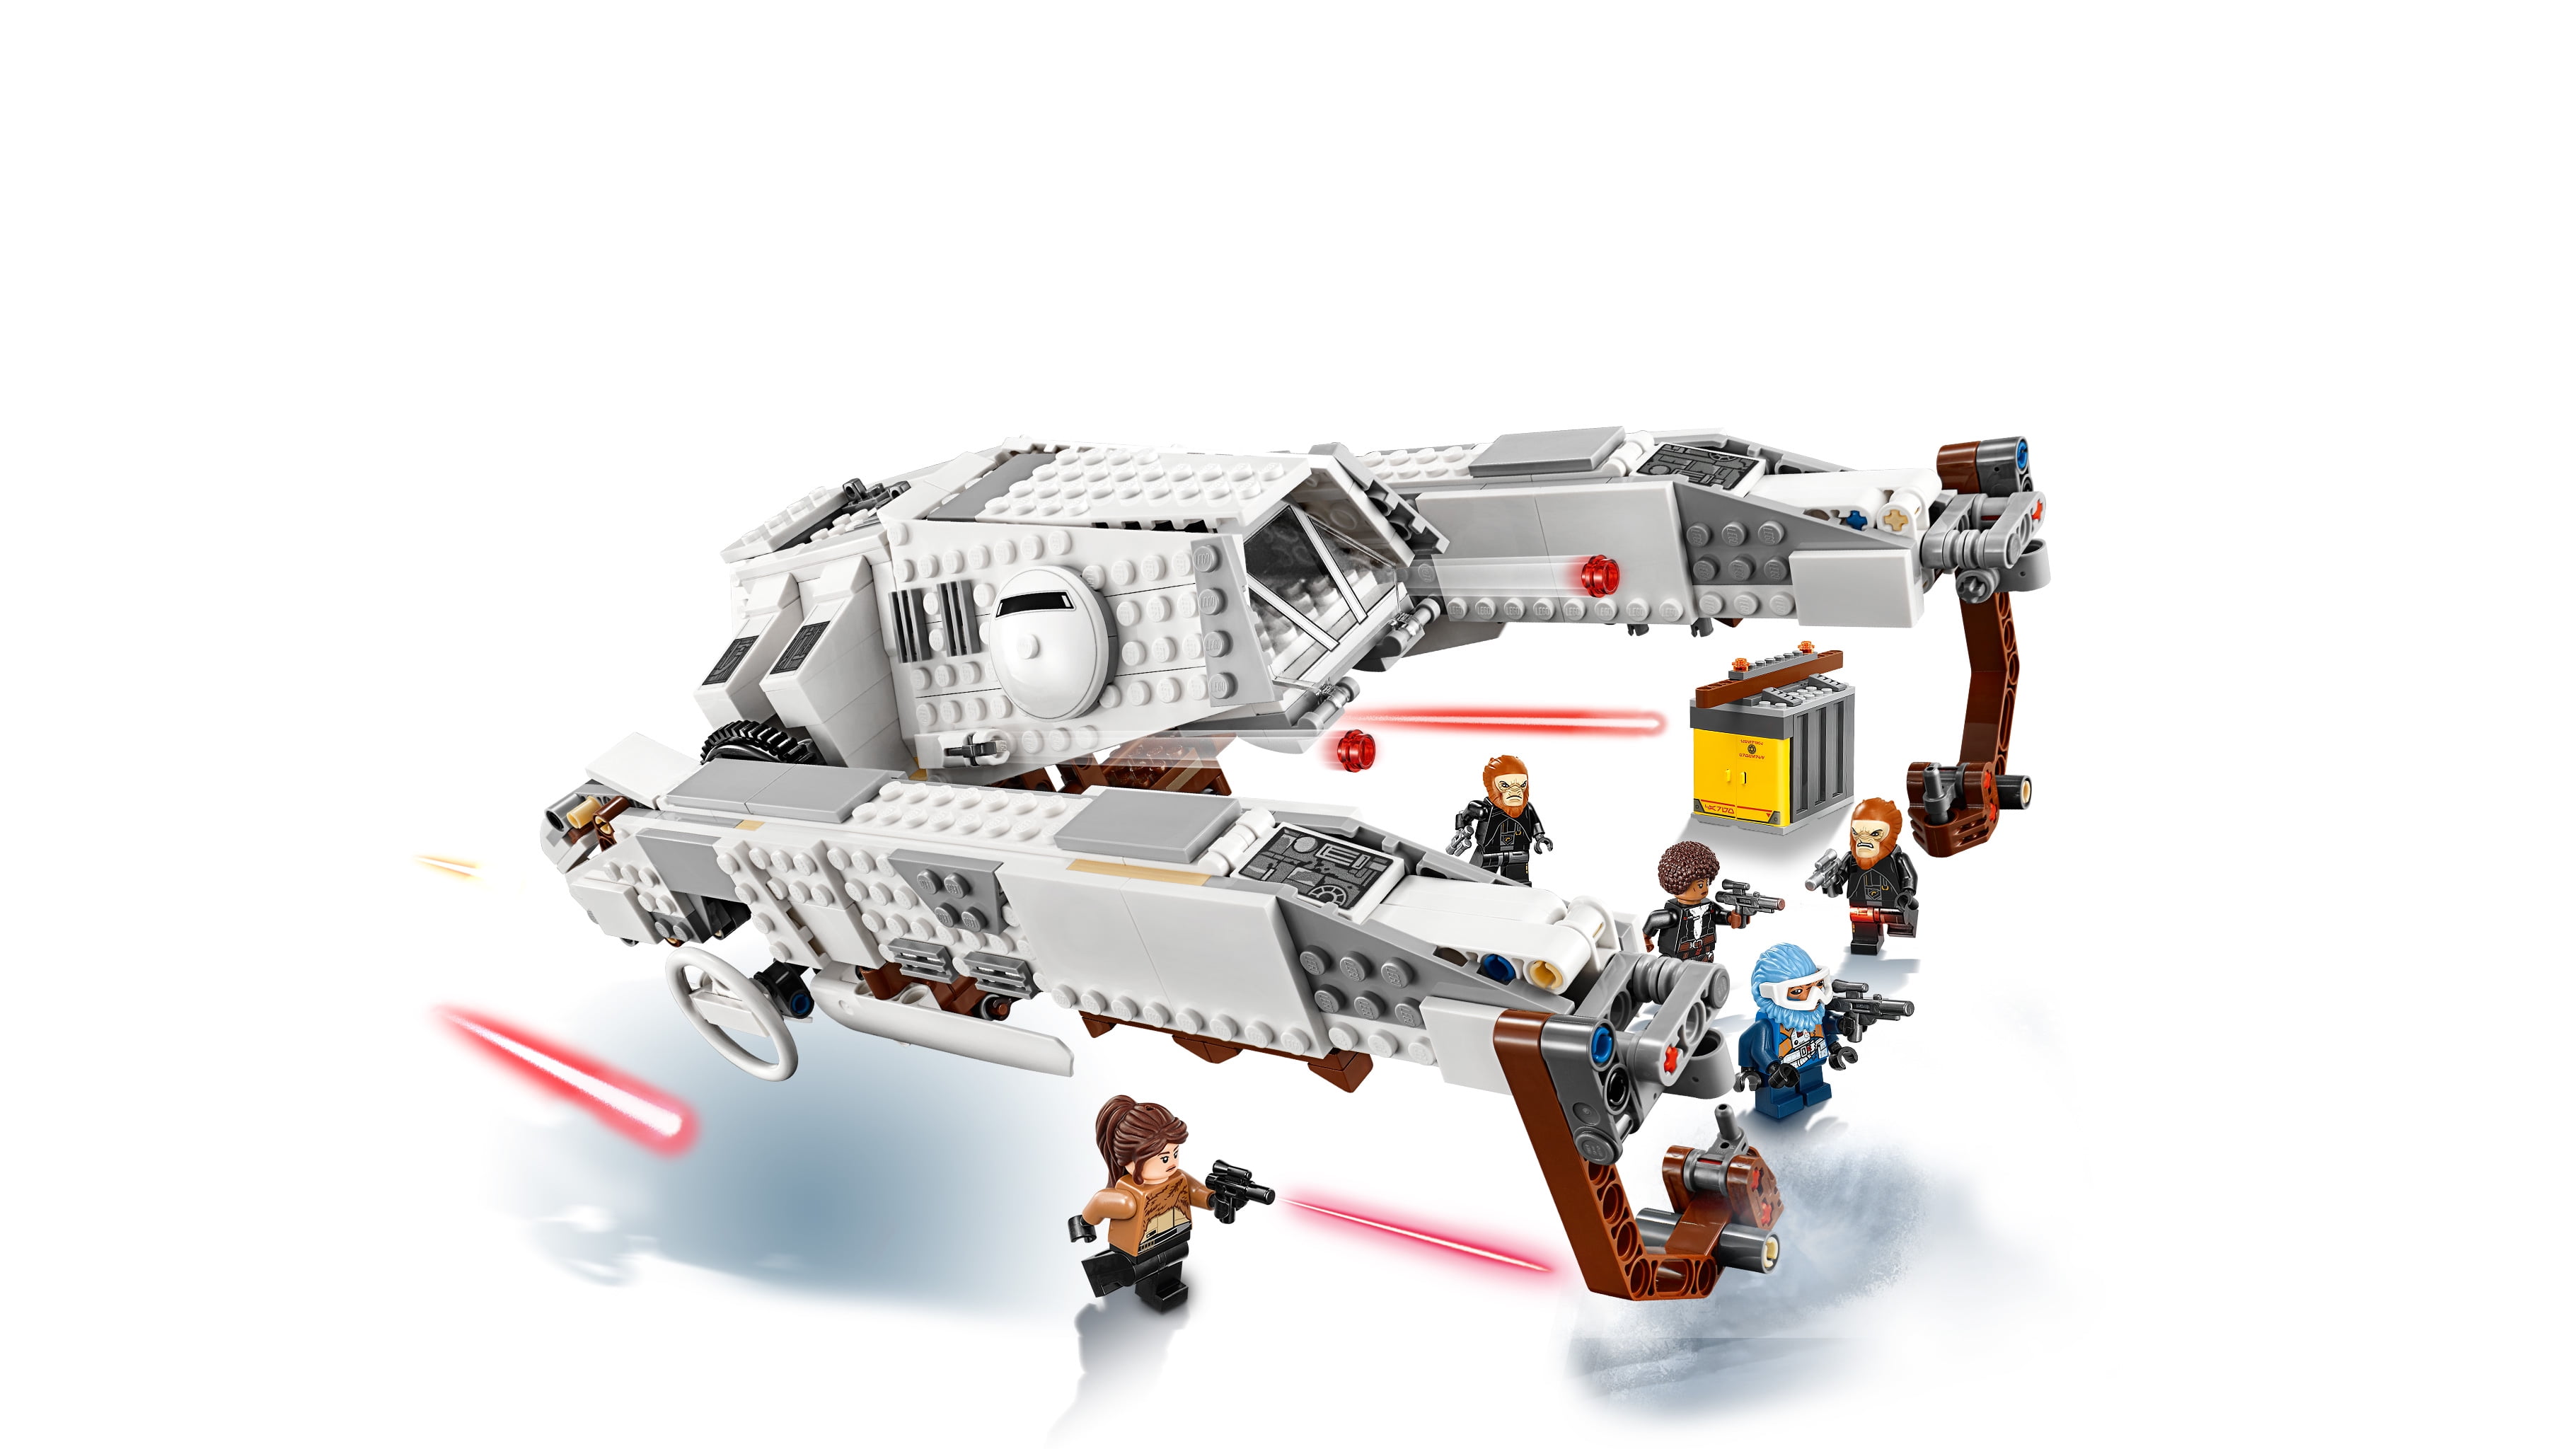 LEGO Star Wars TM Imperial AT-Hauler 75219 Building Set - Walmart.com